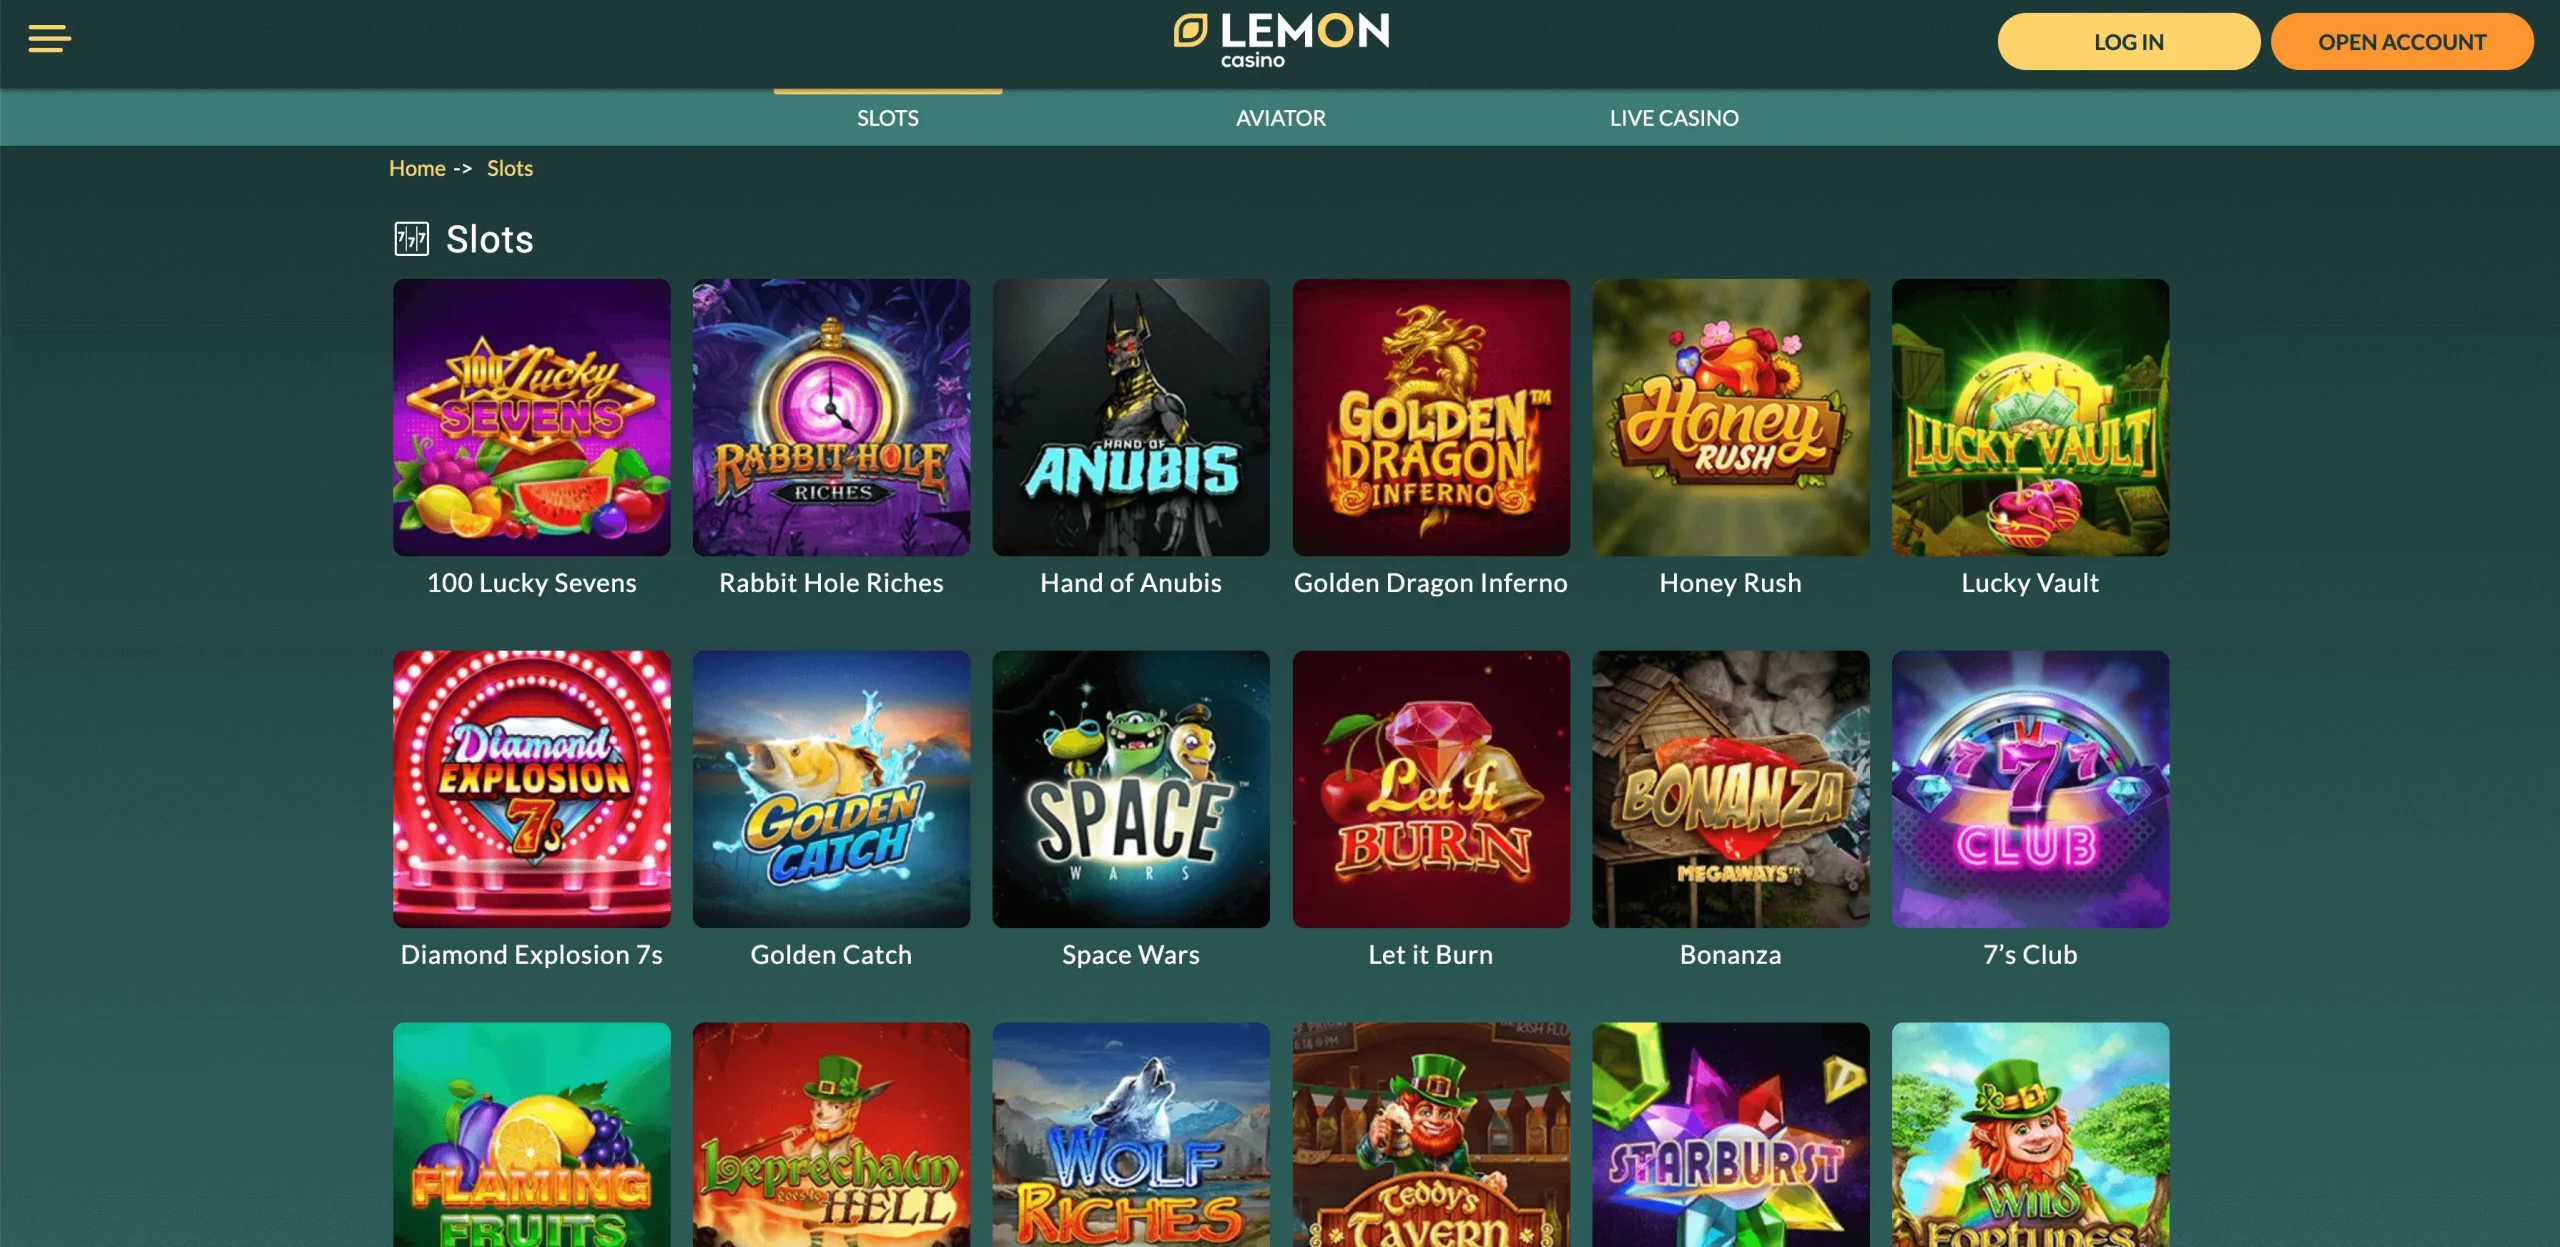 Lemon Casino singapore slots